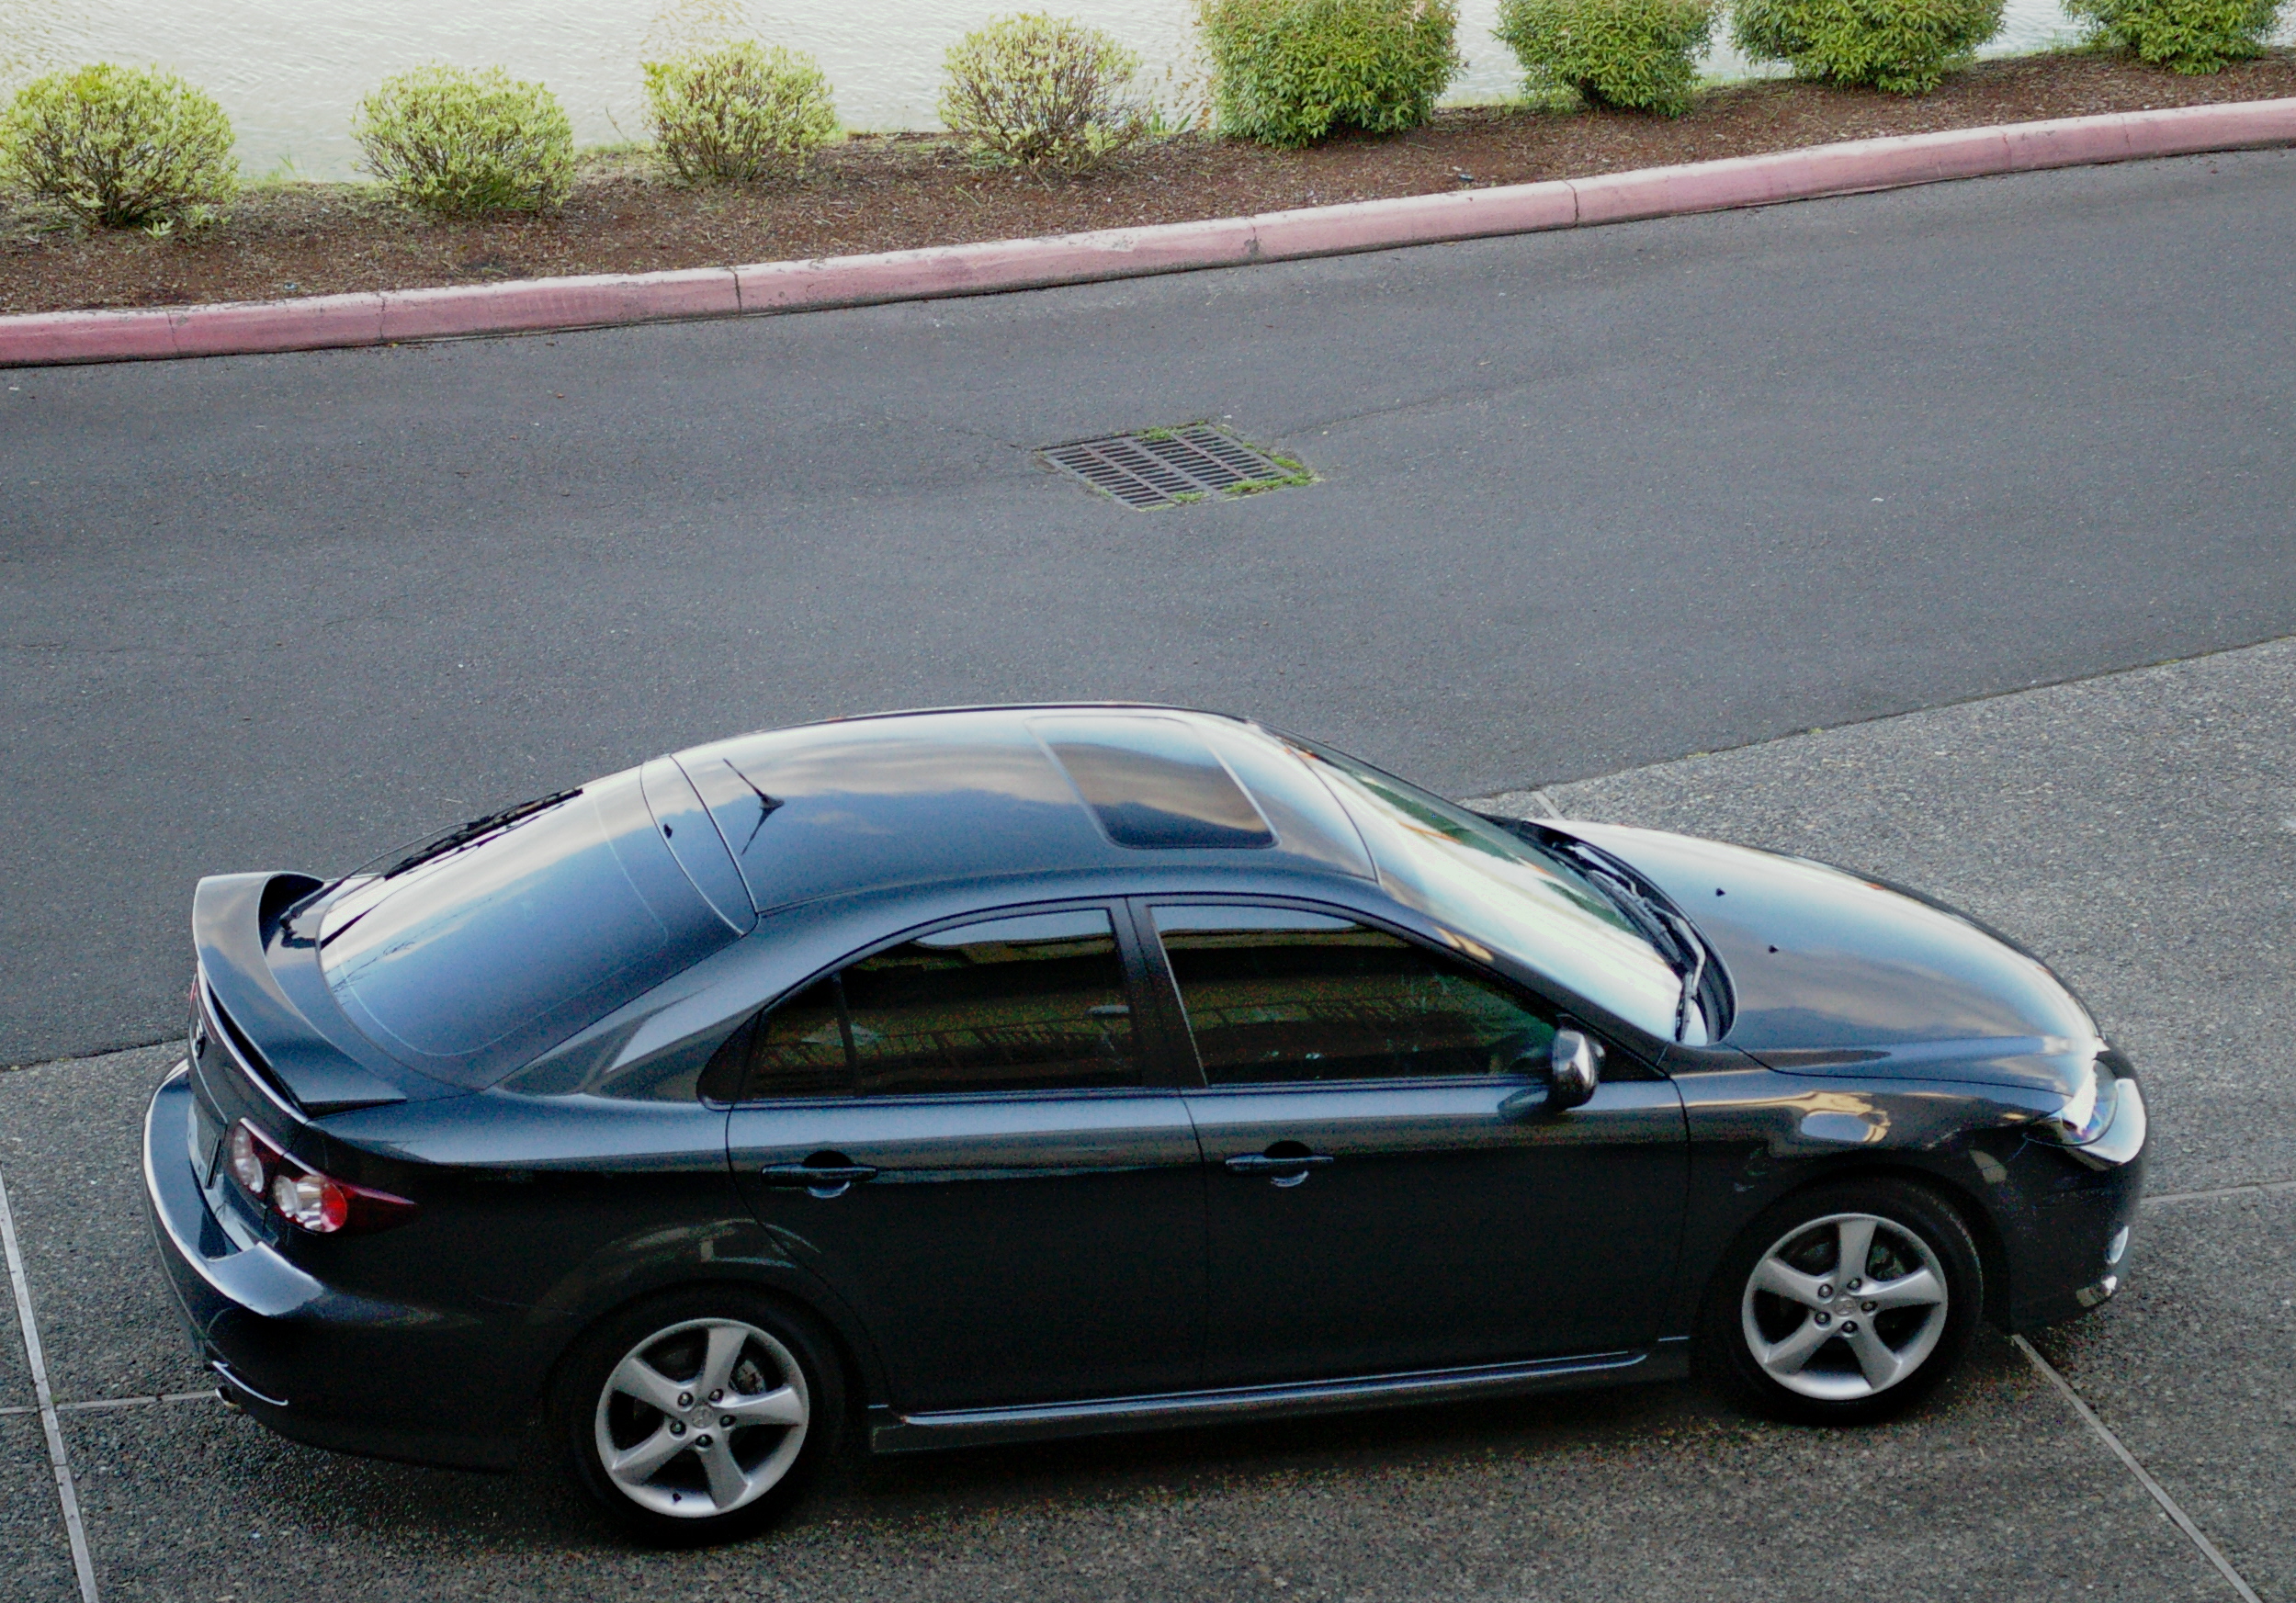 mazda 6 hatchback top rear 1/4 | Flickr - Photo Sharing!